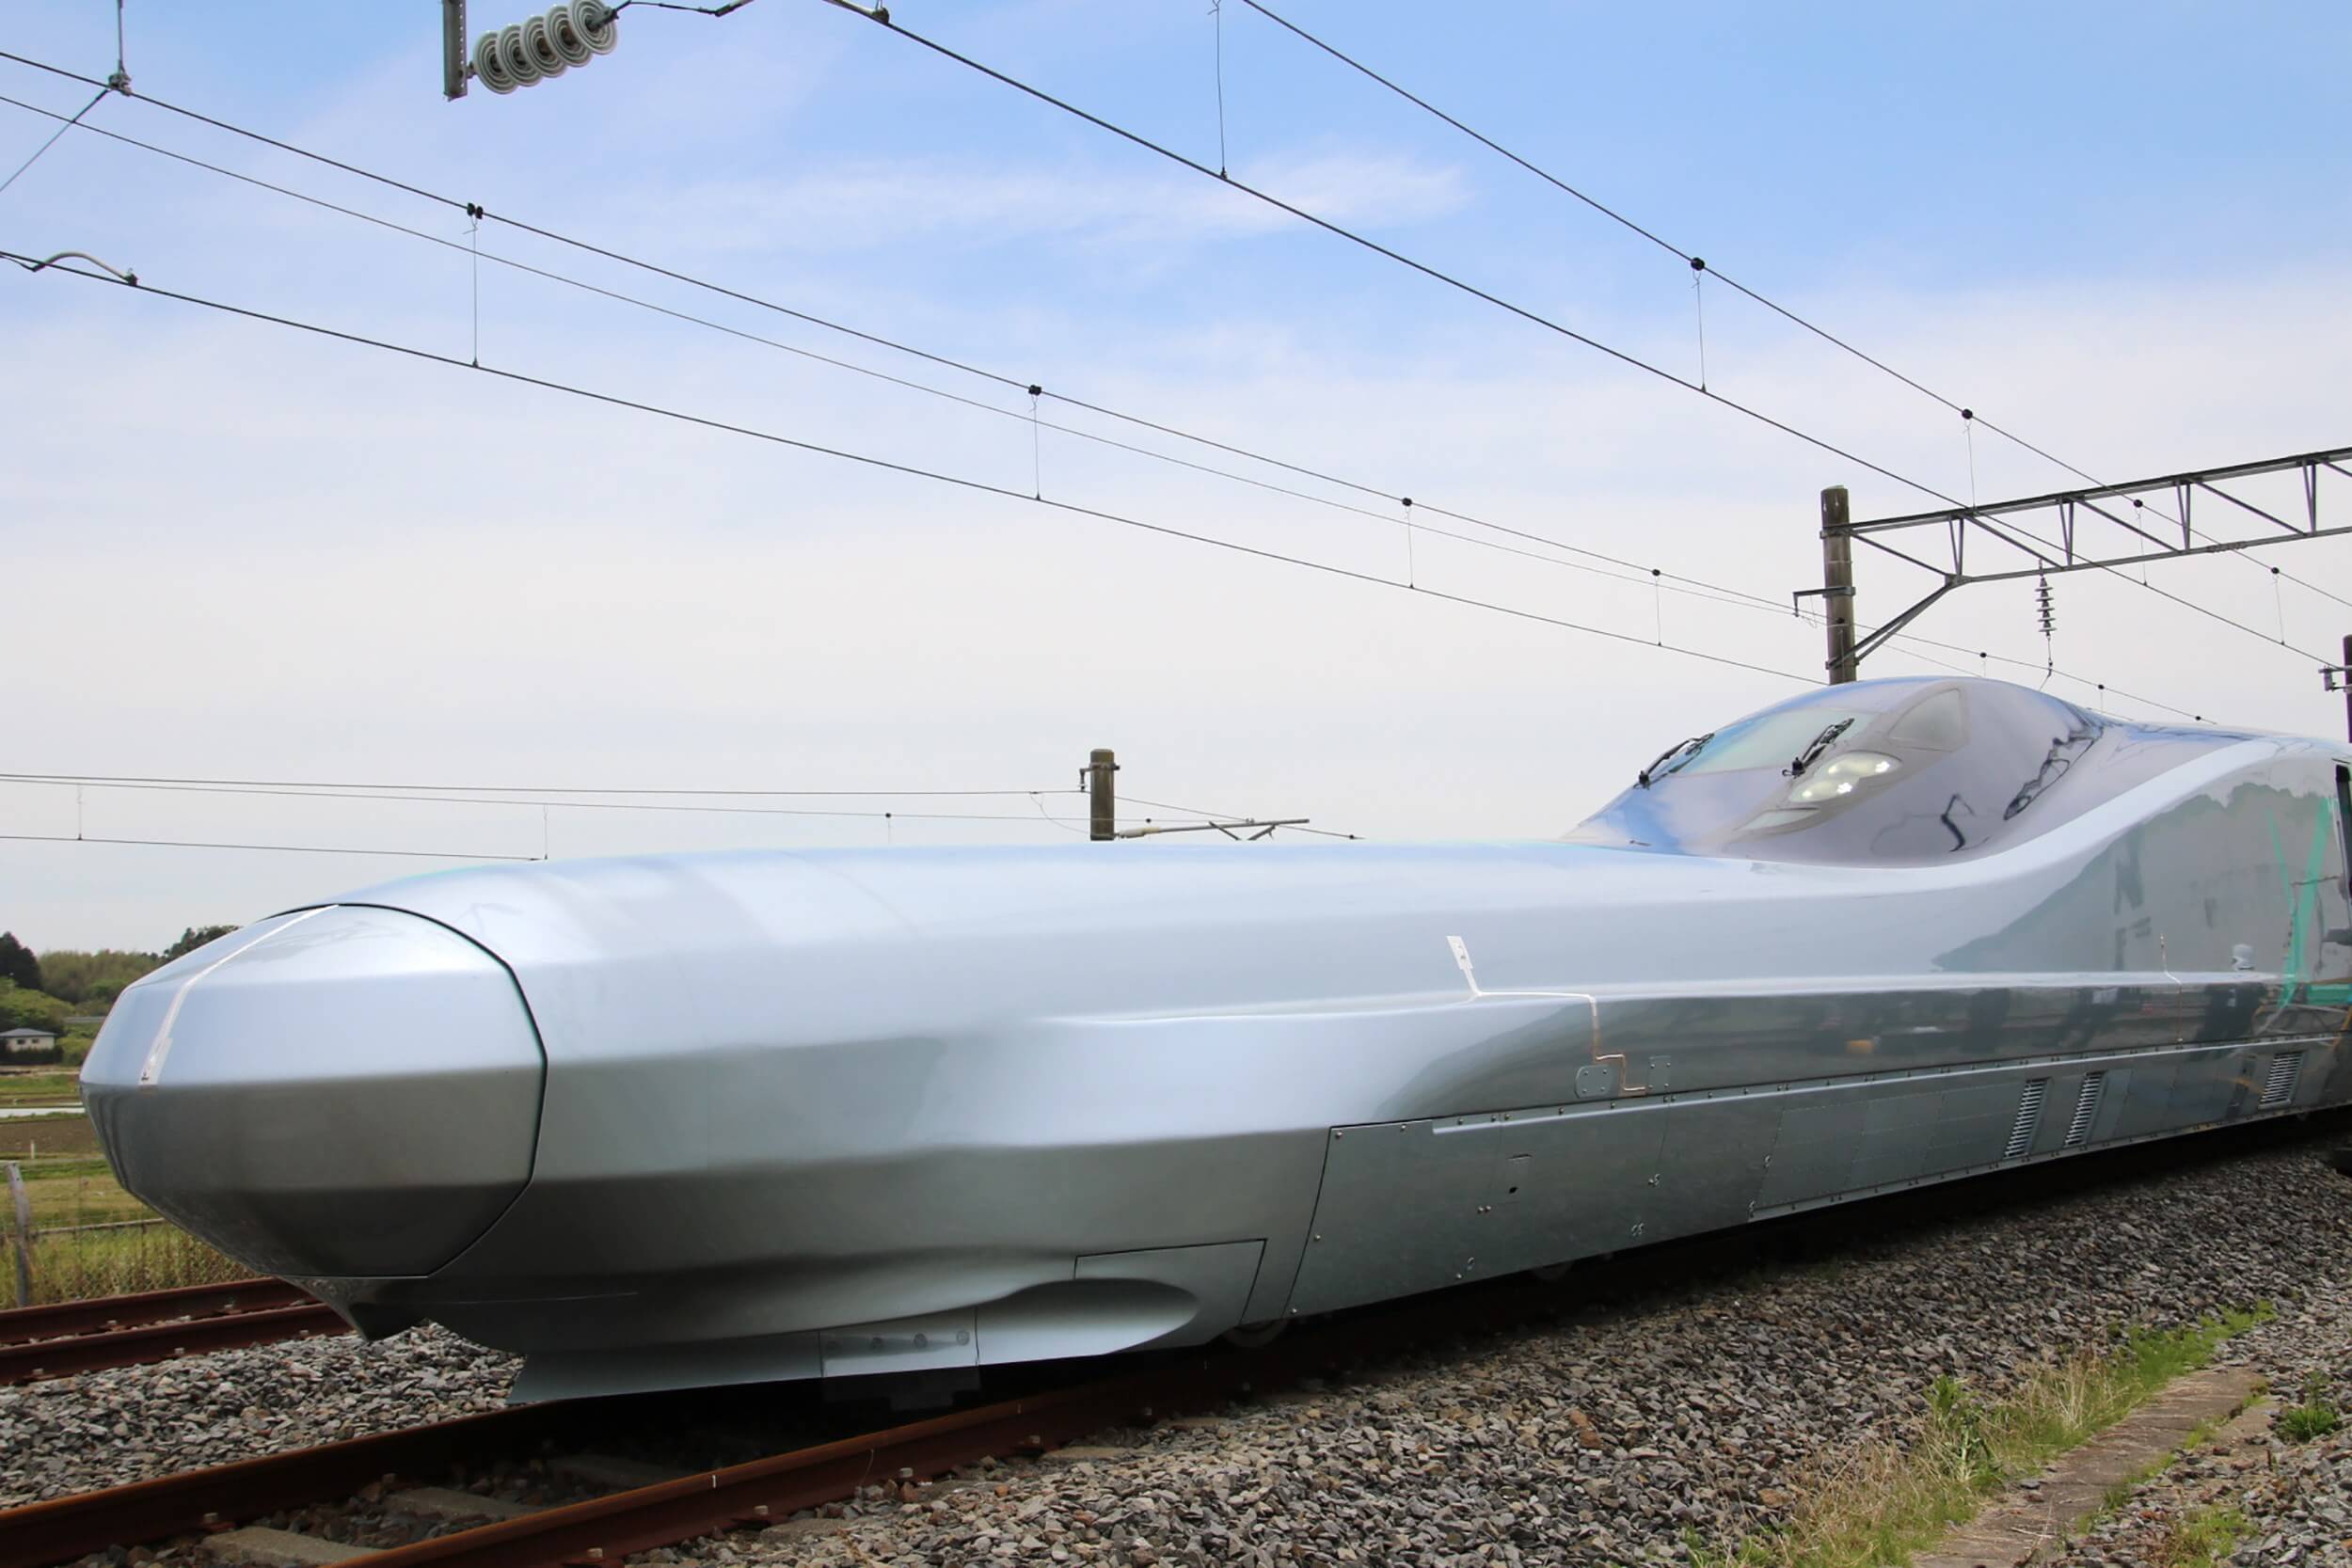 Testing began in Japan on world's fastest bullet train